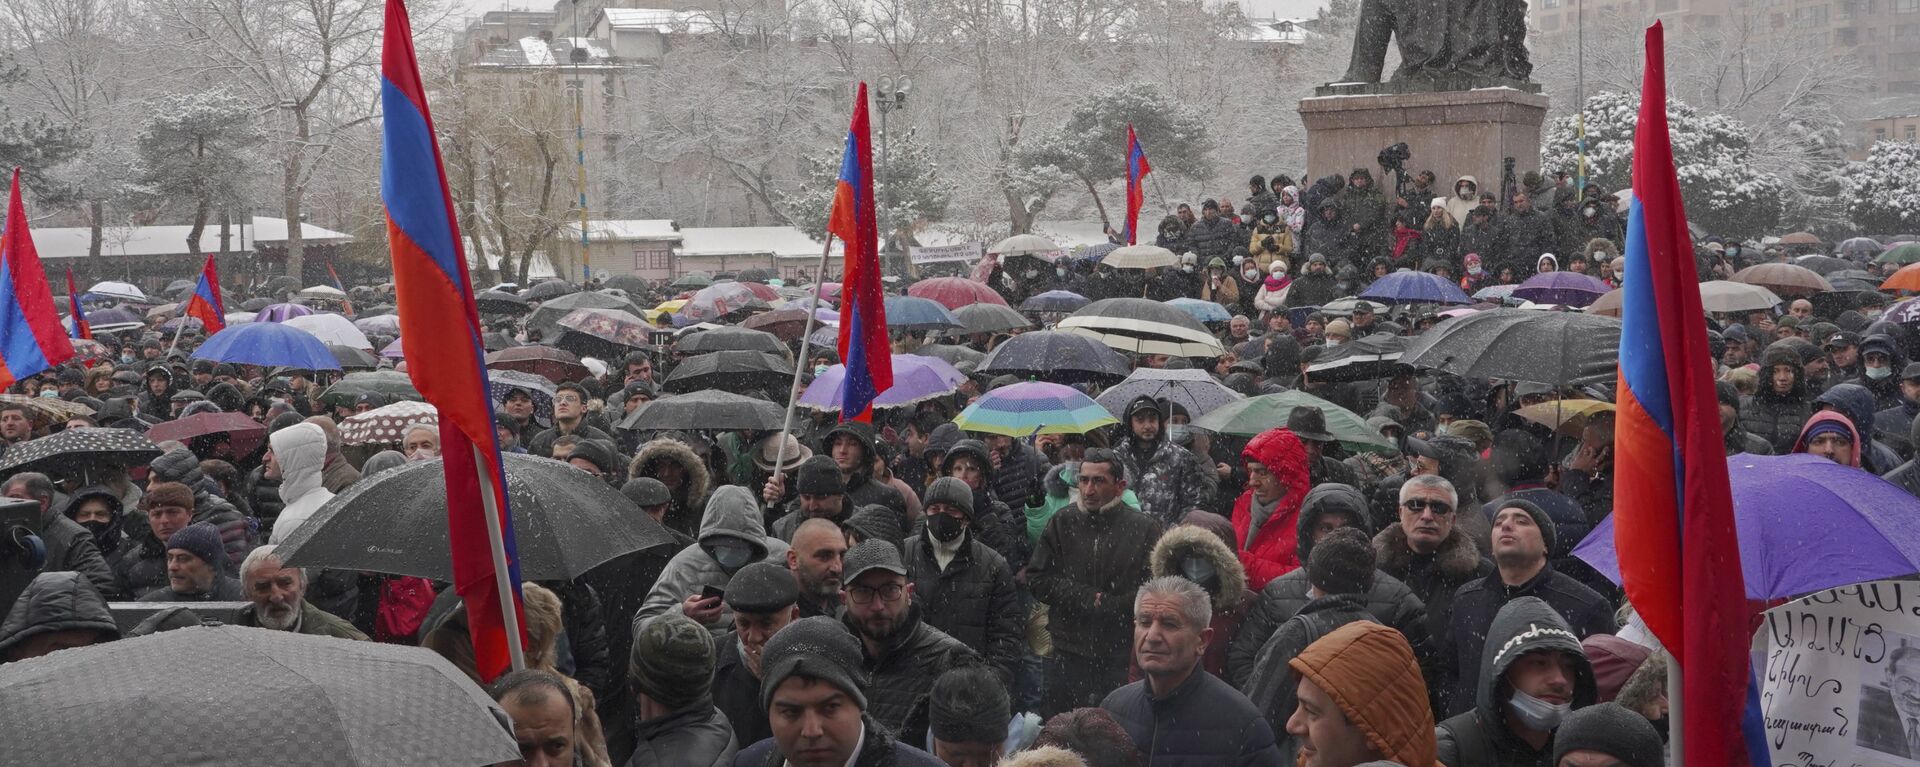 Протесты в Ереване, фото из архива - Sputnik Azərbaycan, 1920, 25.02.2021